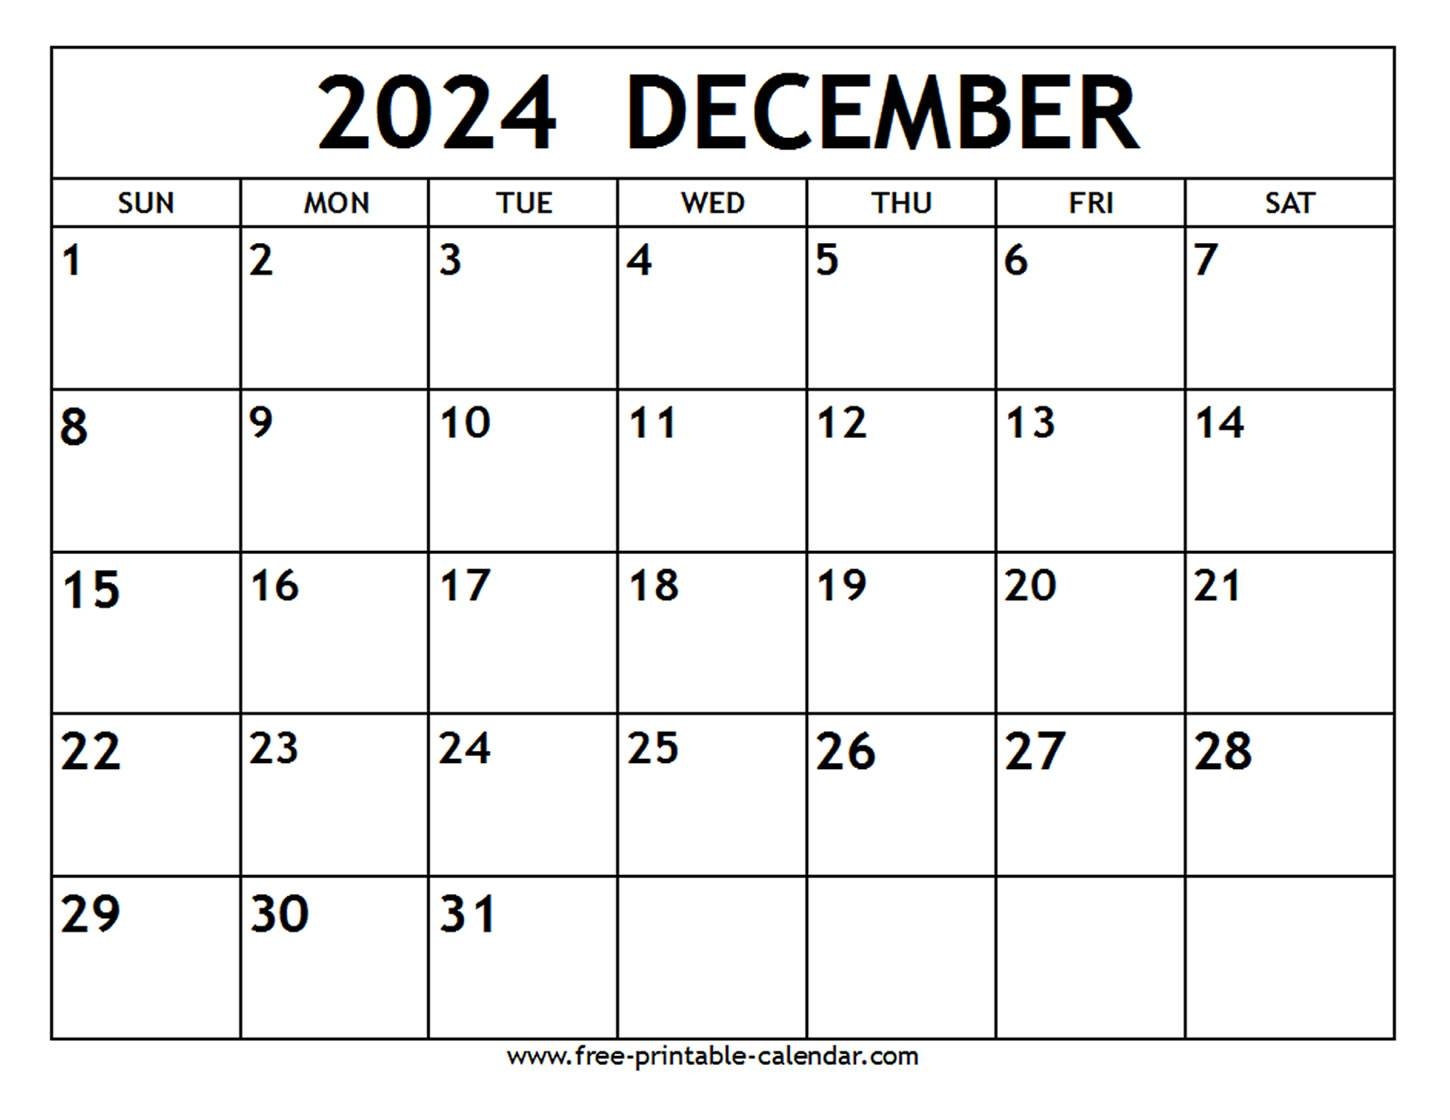 December 2024 Calendar - Free-Printable-Calendar regarding Free Printable Calendar 2024 Deember